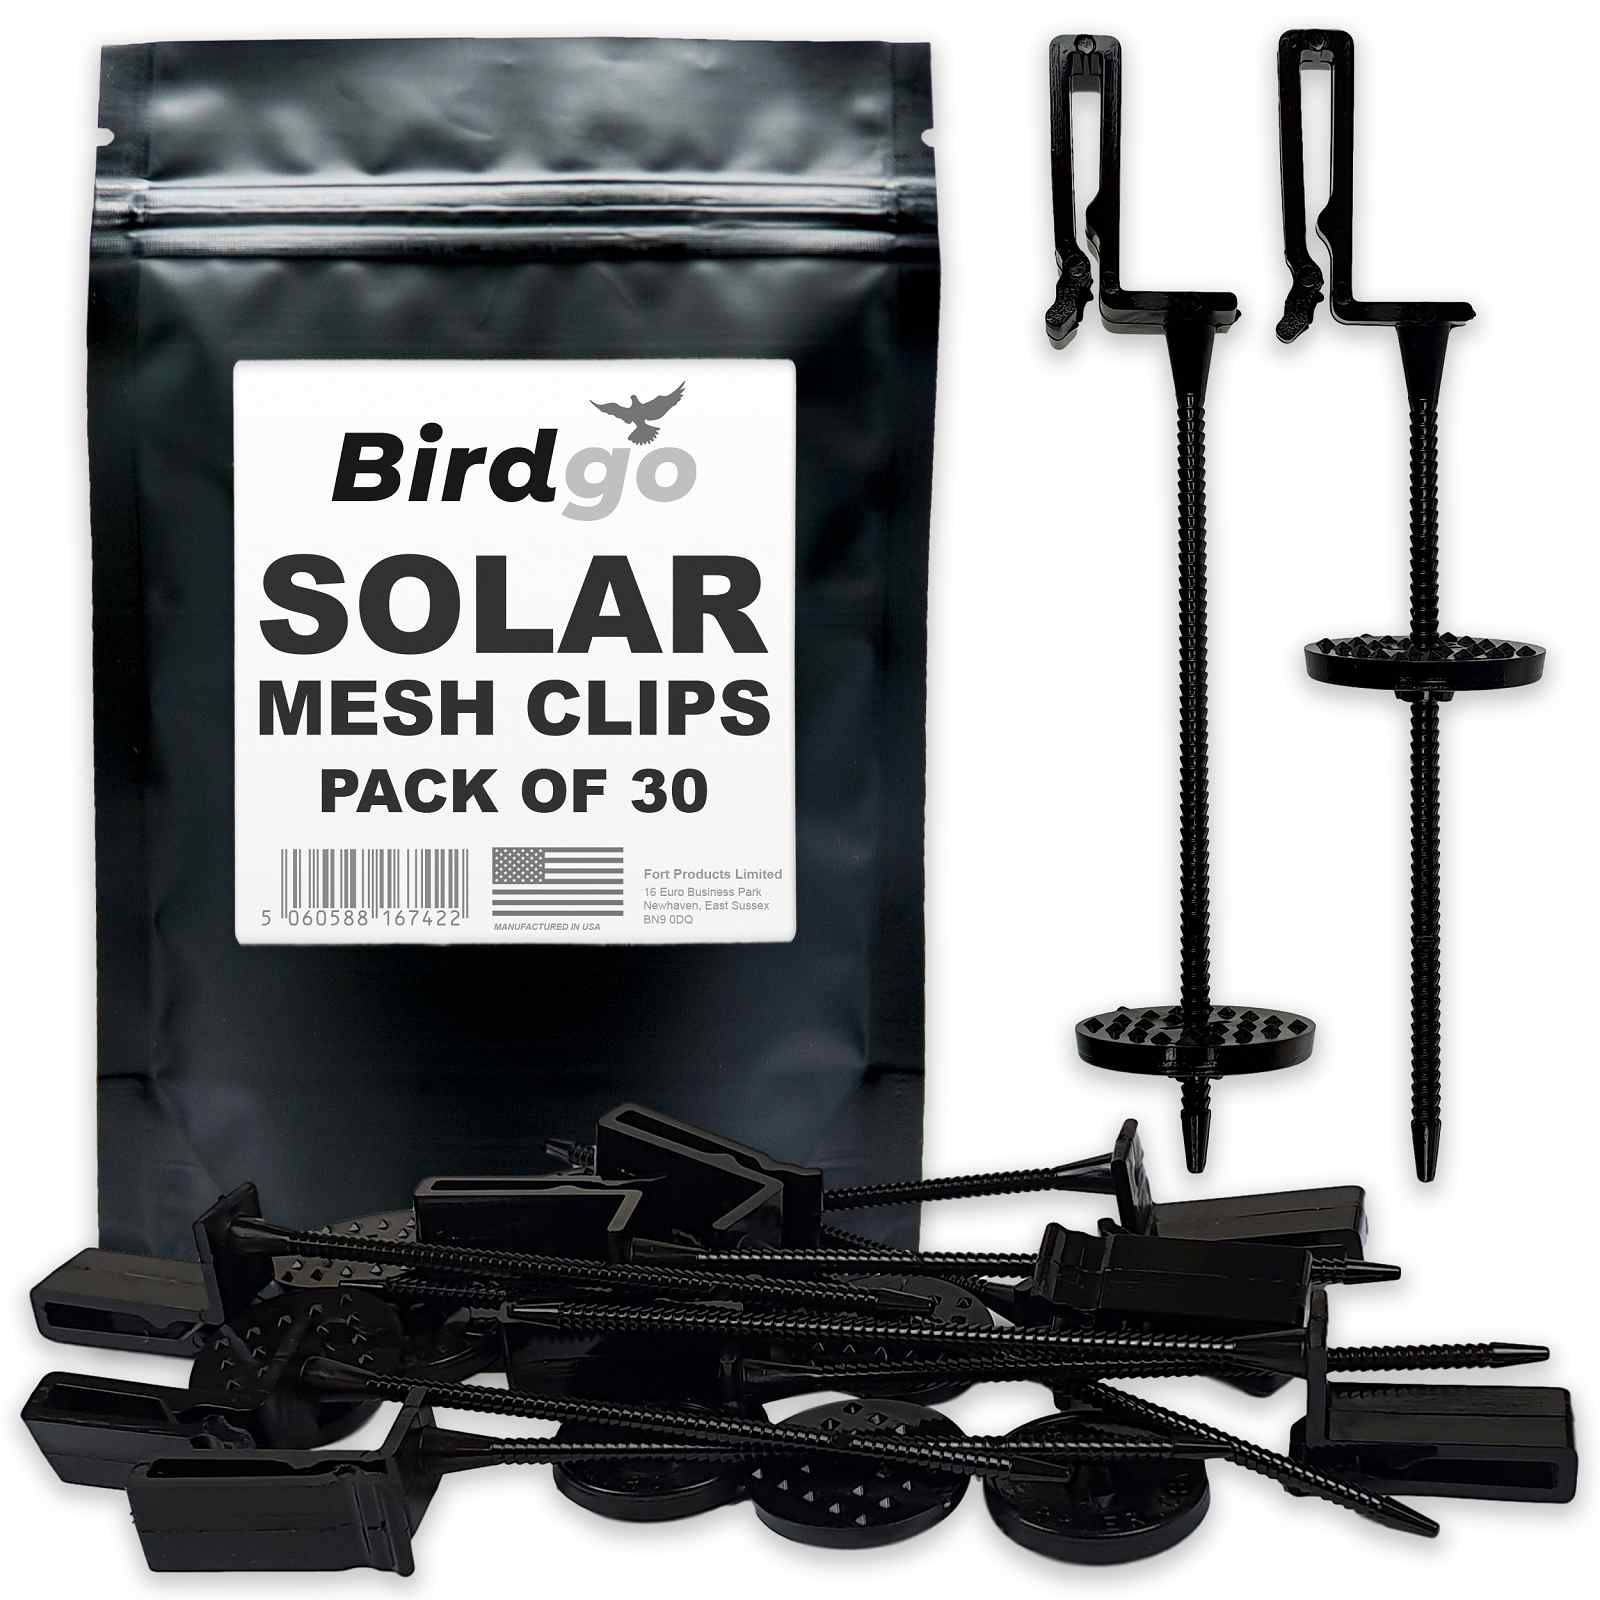 Birdgo Professional Solar Panel Mesh Clips for Pigeon Prevention (Pack of 30) eBay